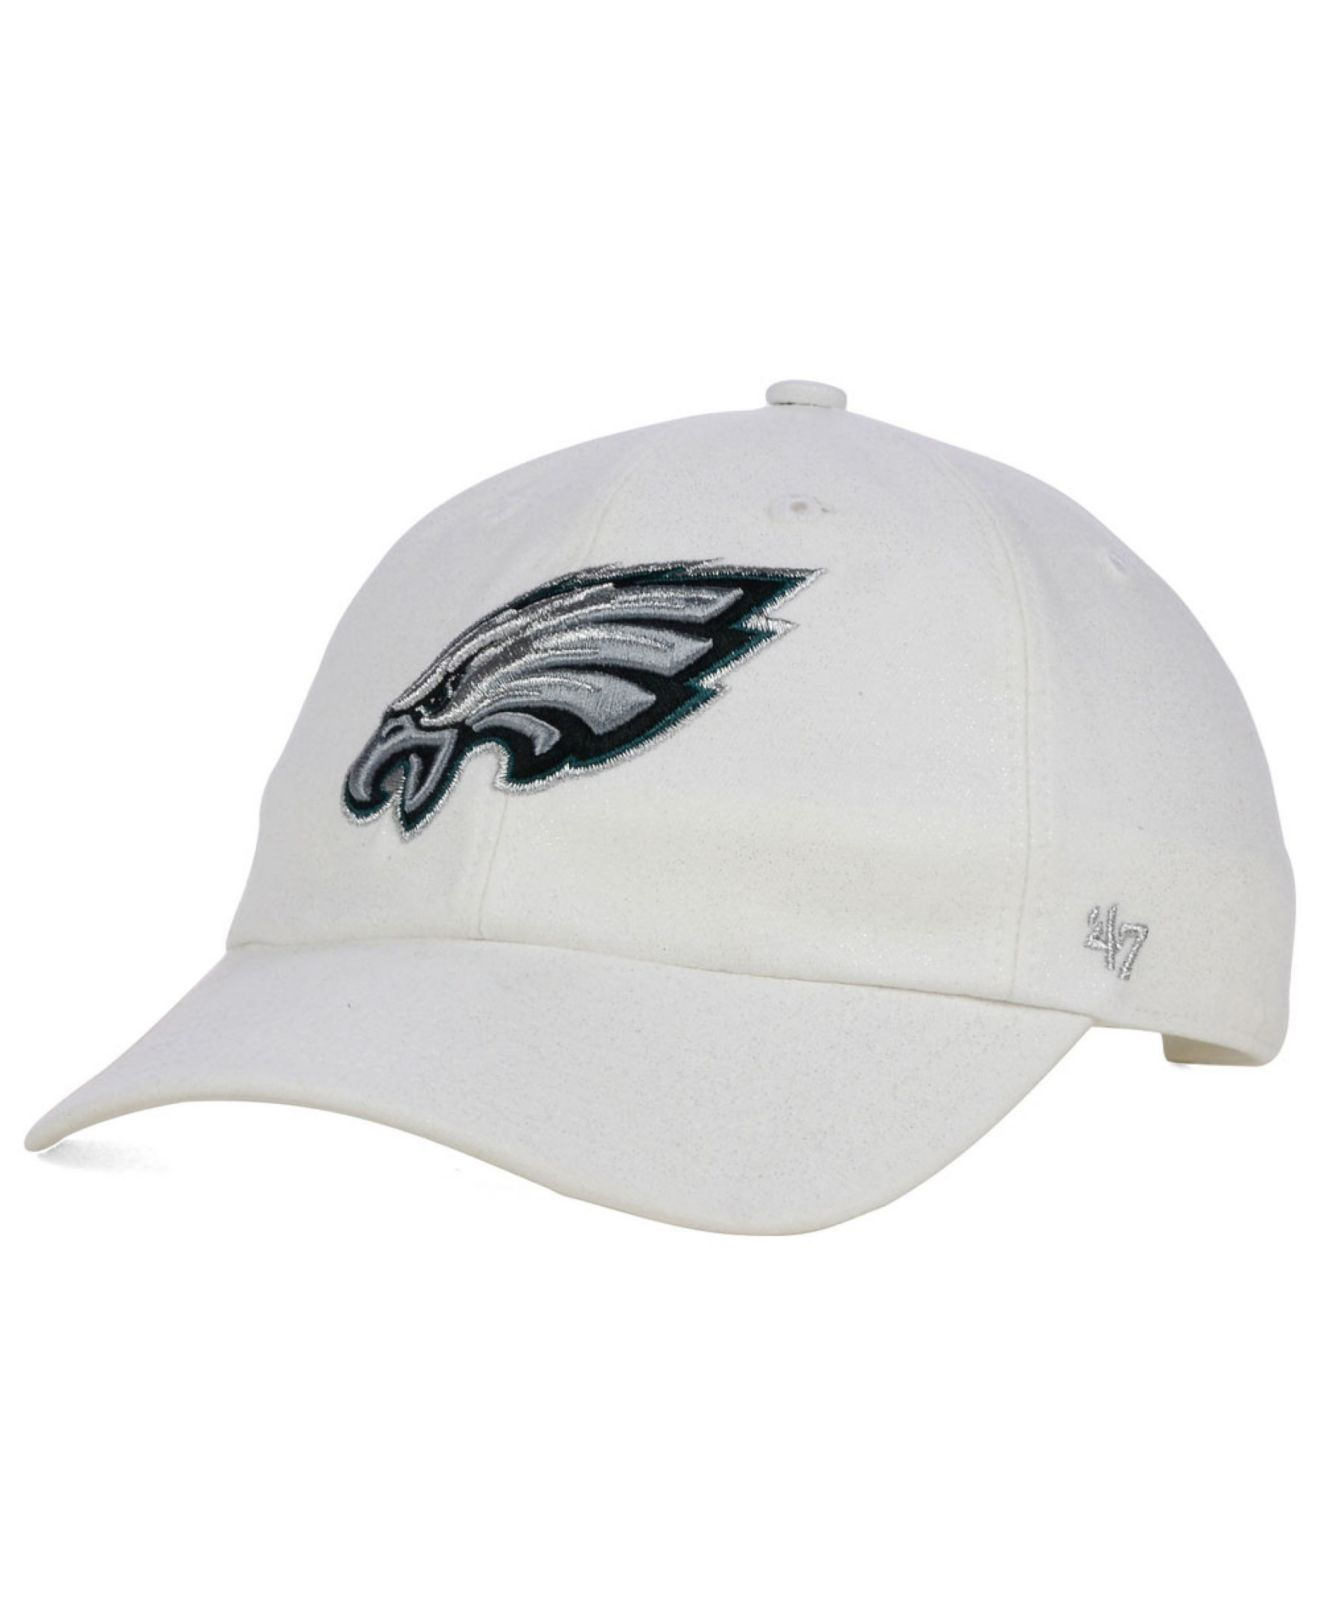 philadelphia eagles white hat